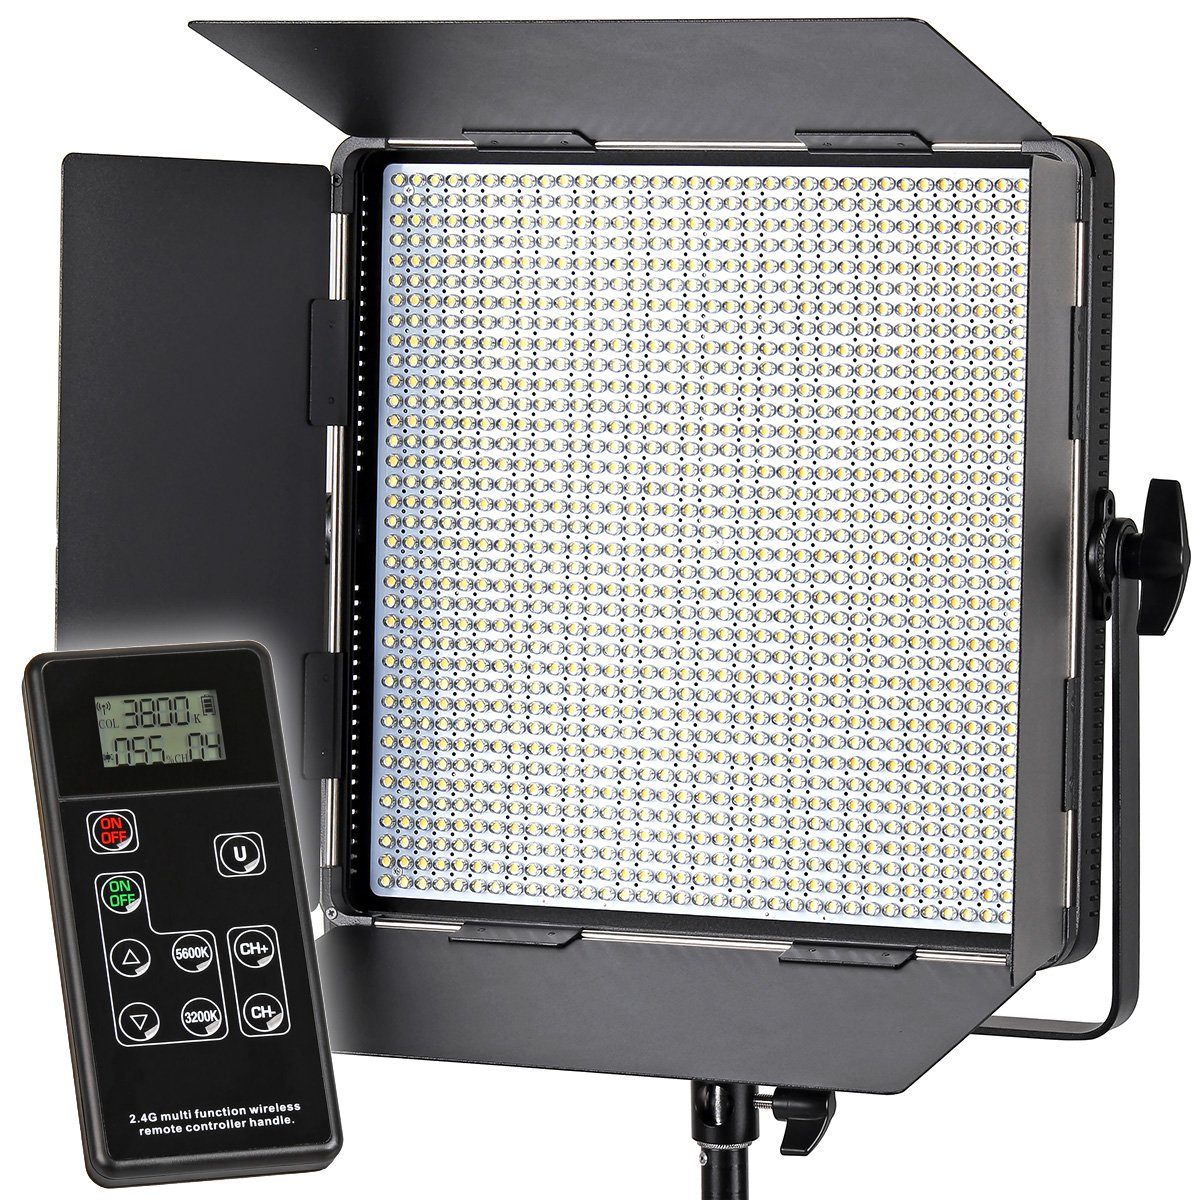 ayex LED Bilderleuchte Profi-Videoleuchte 1296 LEDs DMX kompatibel inkl. Funk-Fernbedienung